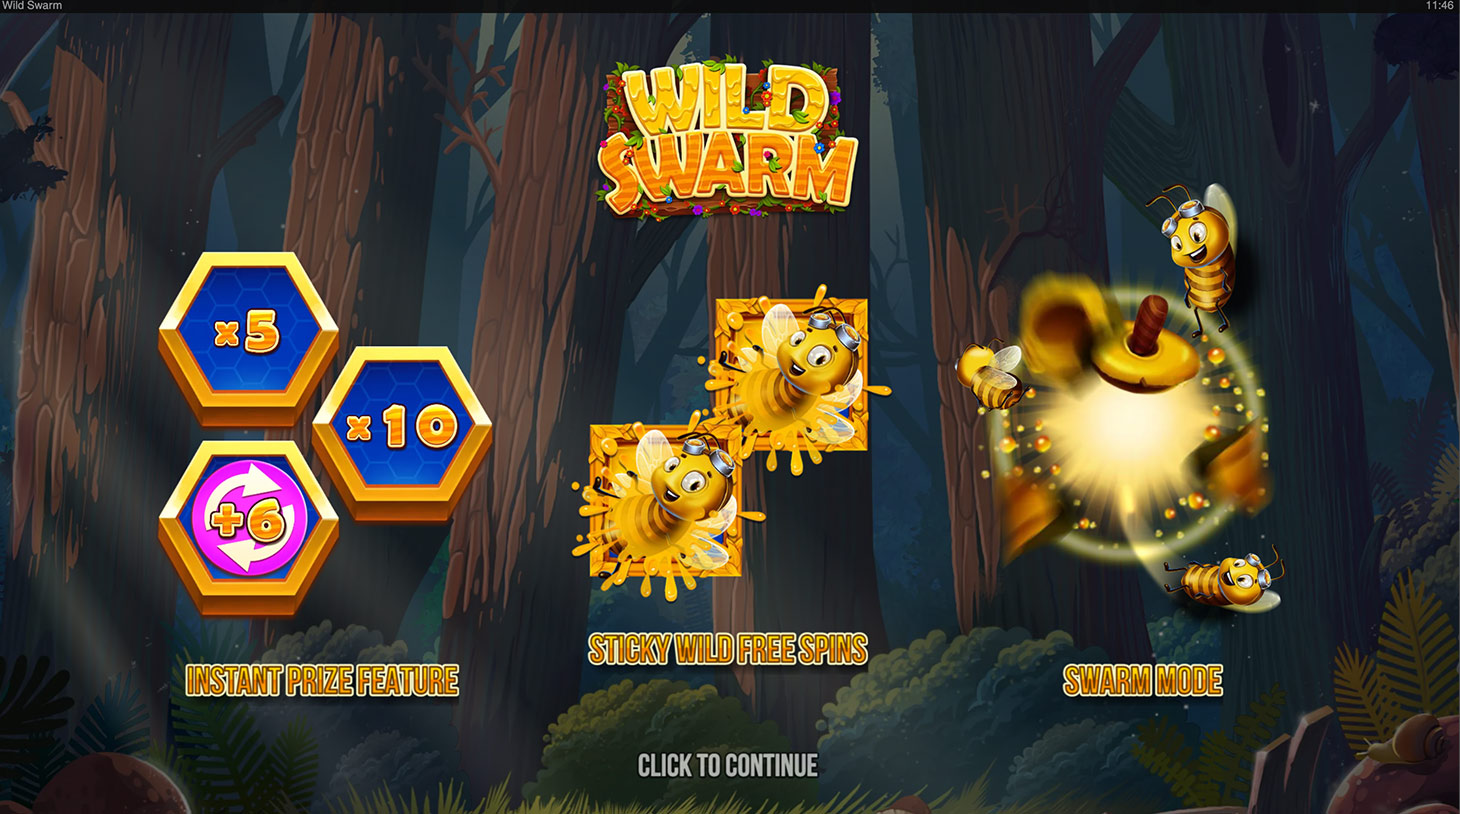 Wild Swarm spielautomat